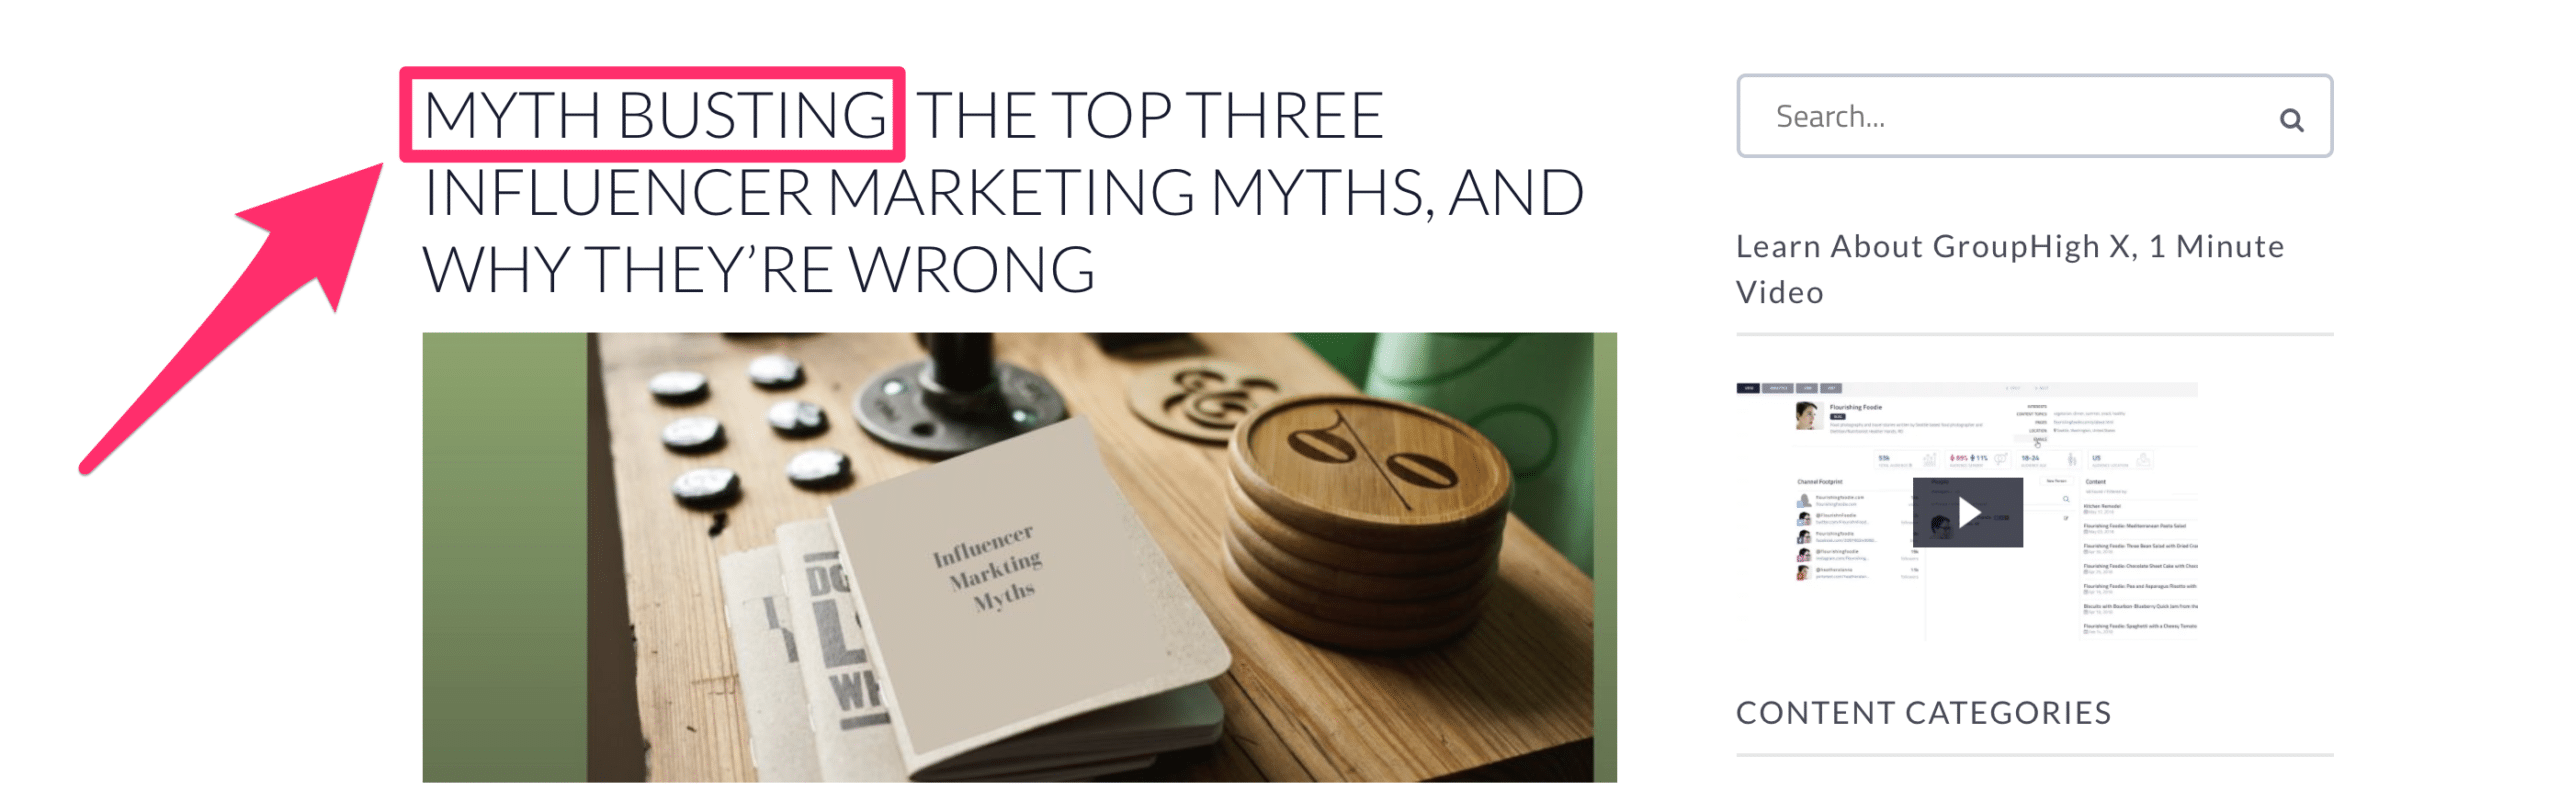 marketing myths headline debunked